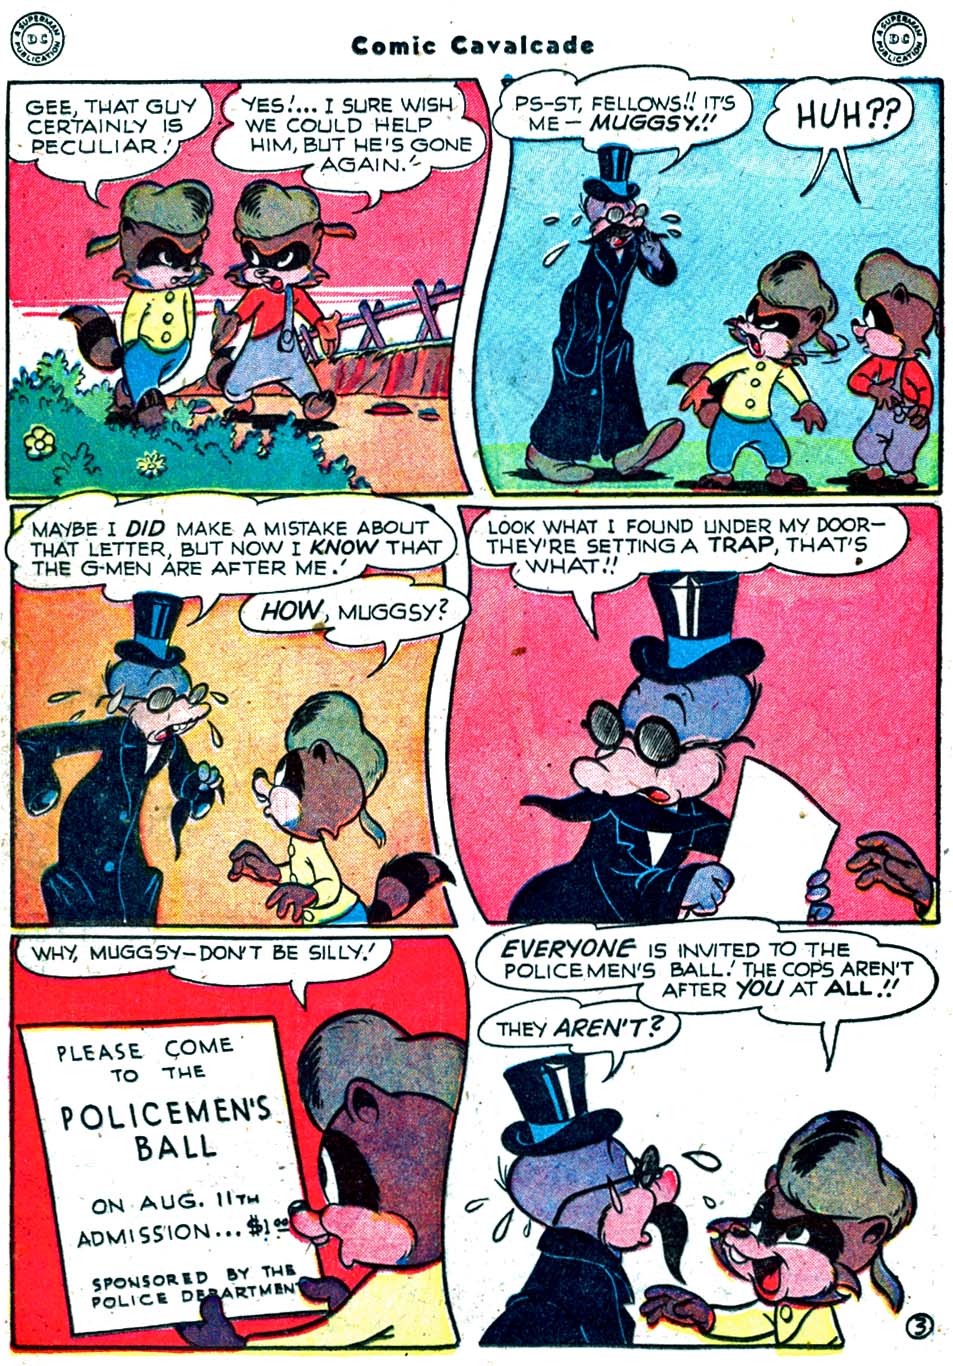 Comic Cavalcade issue 32 - Page 22